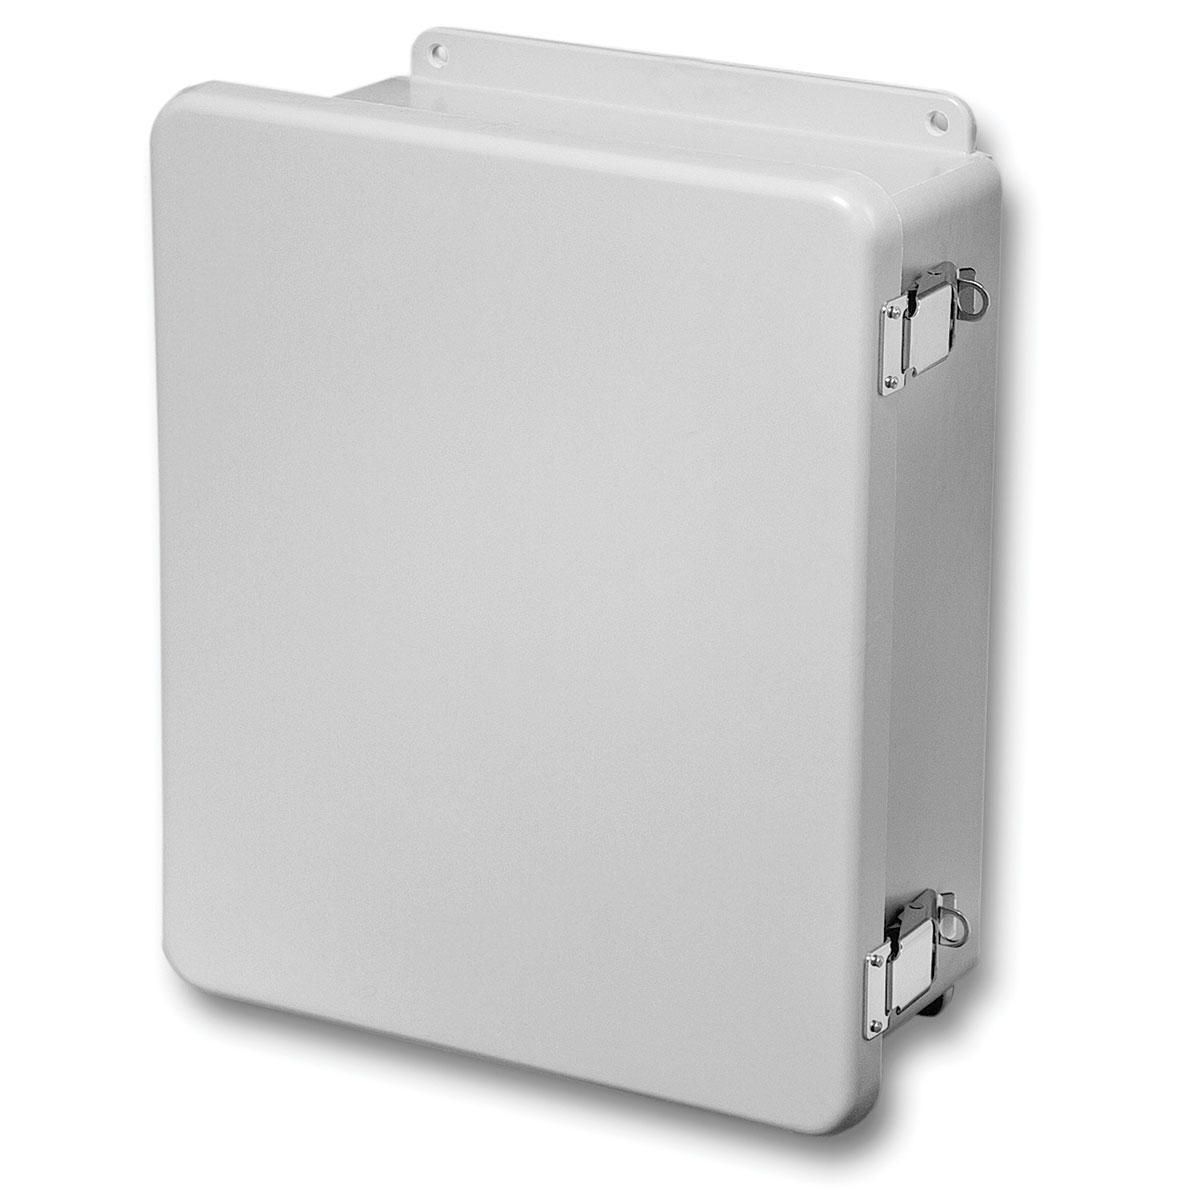 Hama 20661 'Mini' Cable Box, 11.5 x 23 x 11.8 (W x D x H), with Rubber Feet  - White